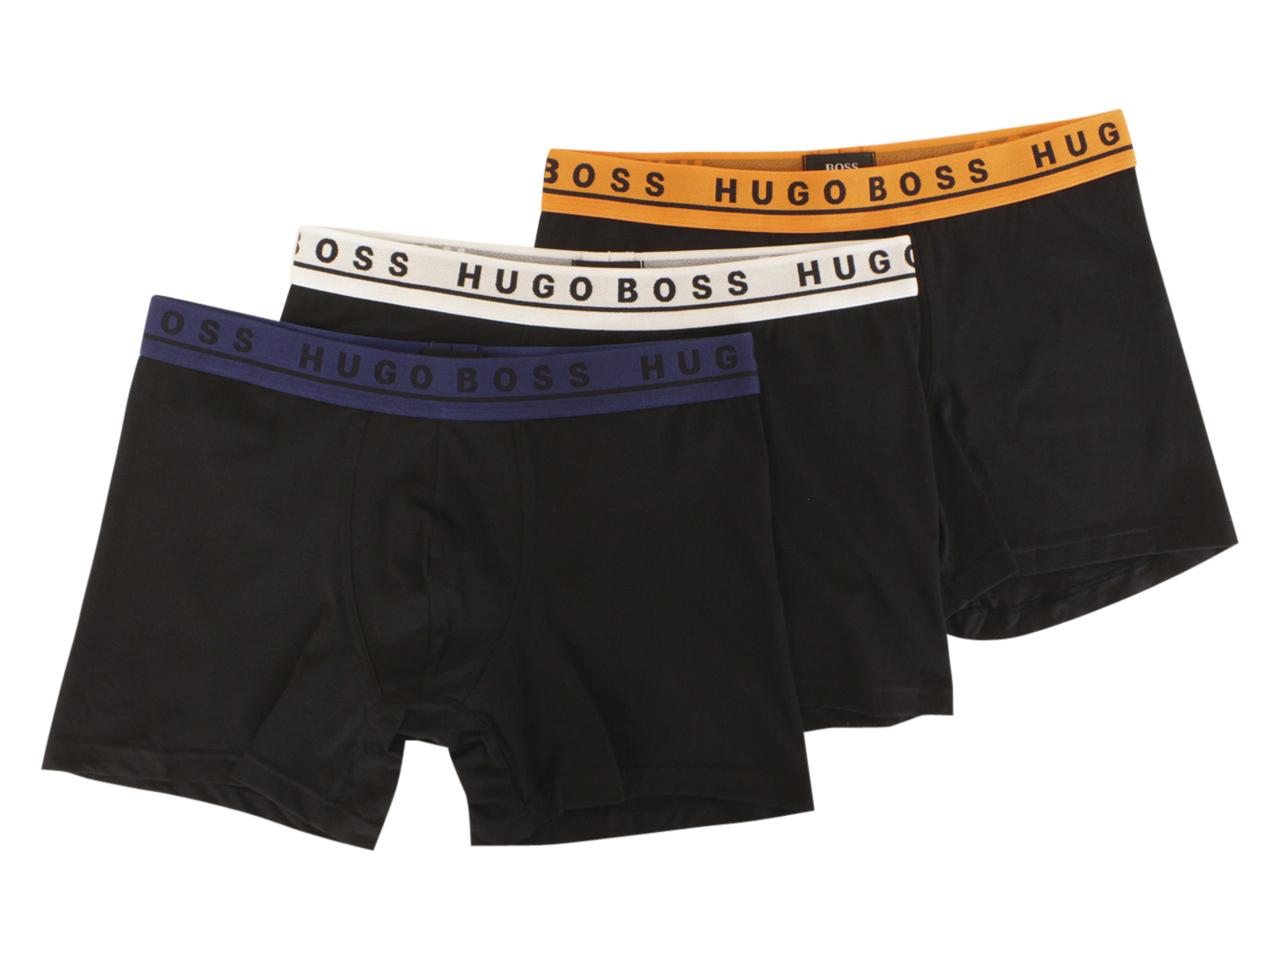 hugo boss underpants